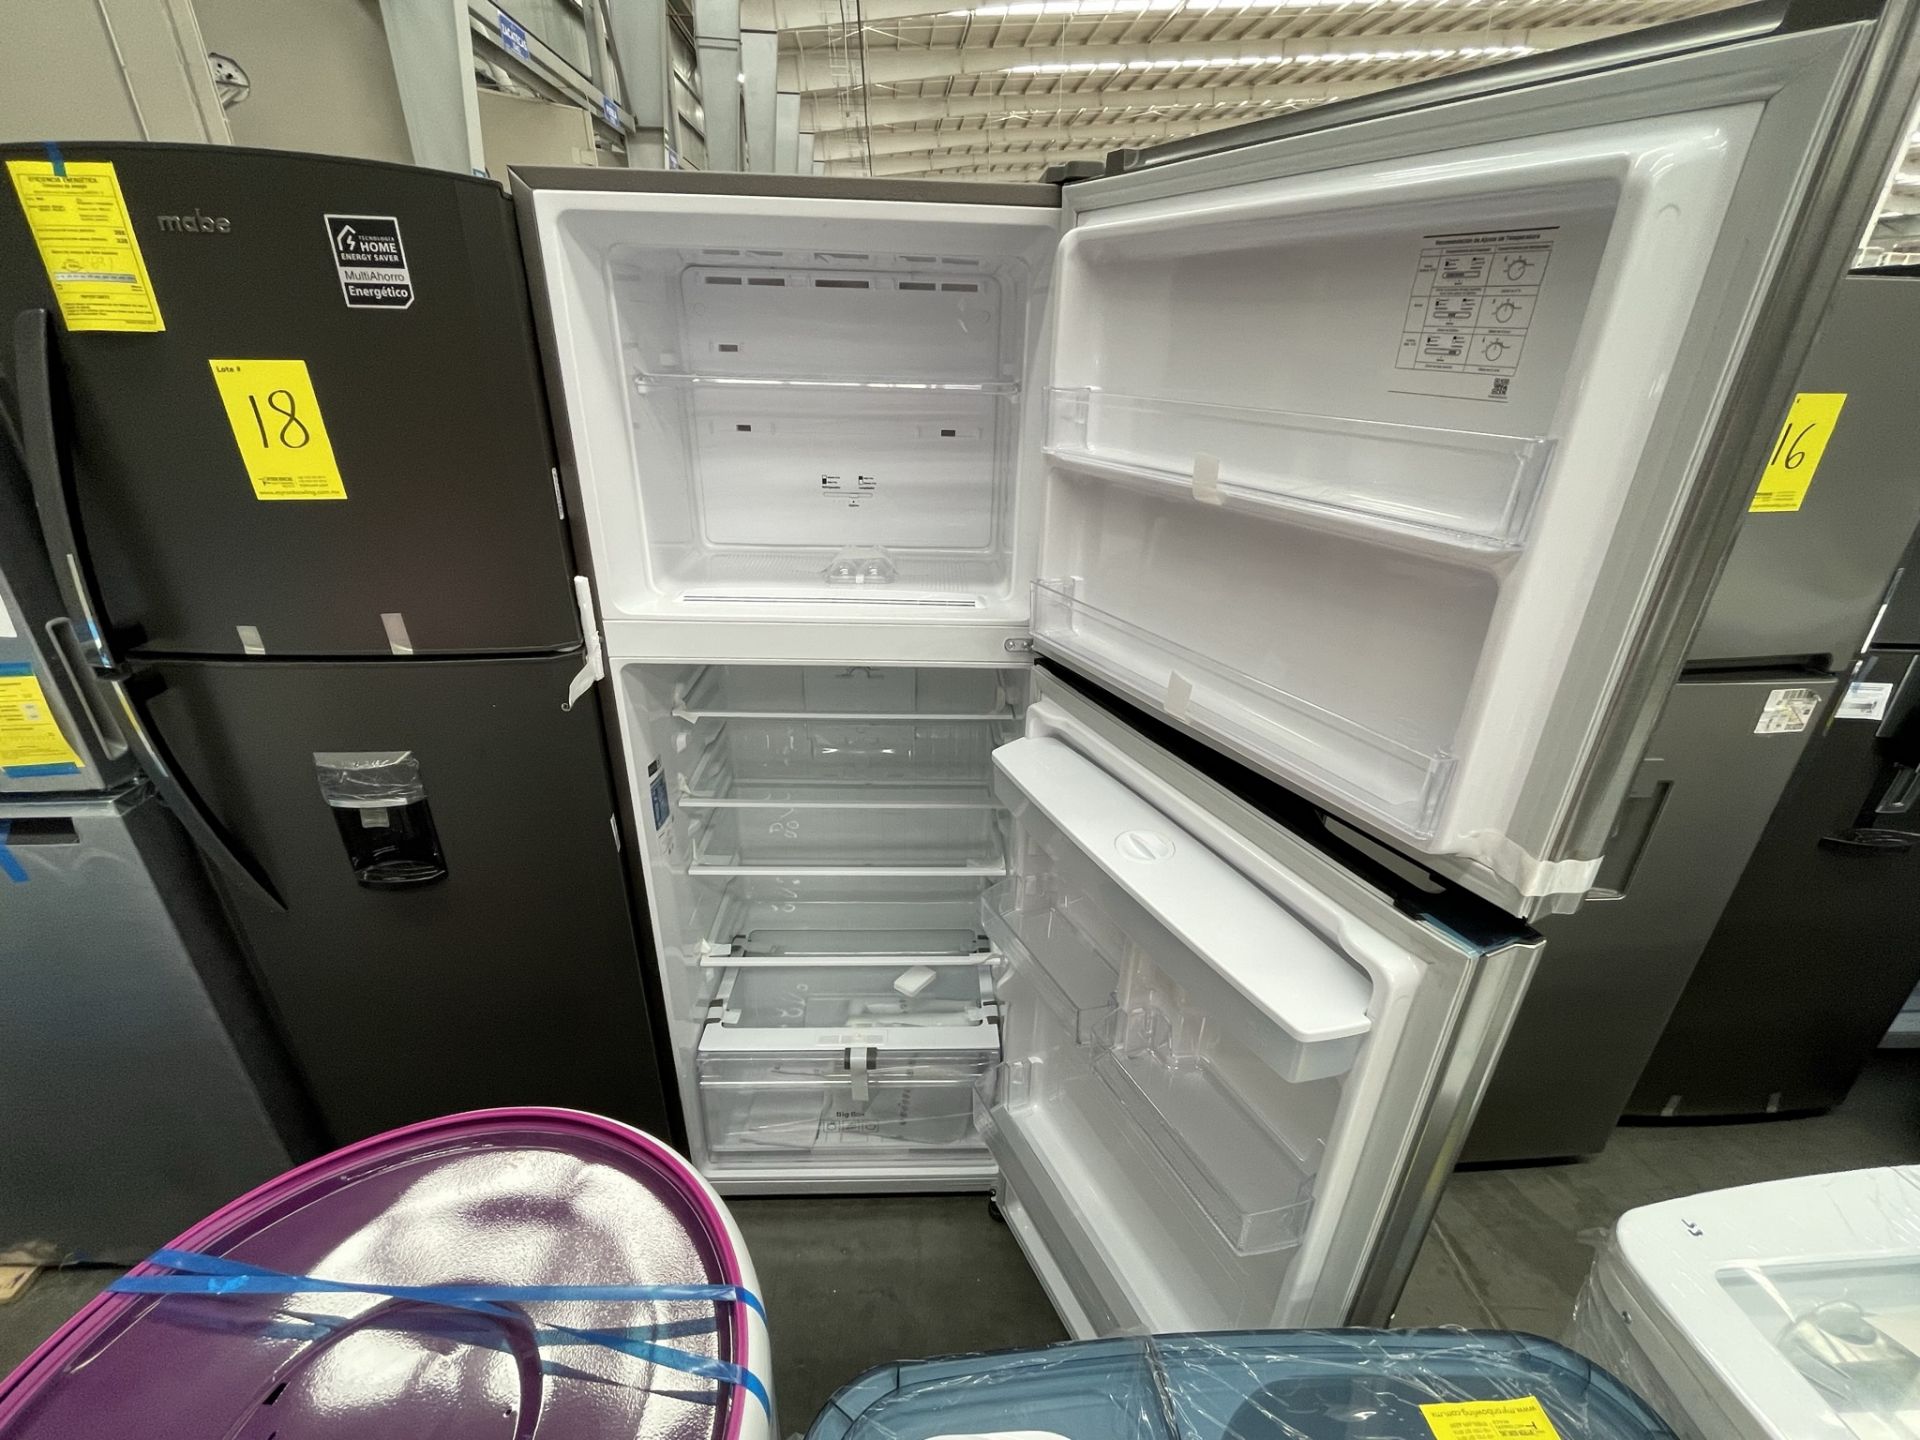 (EQUIPO NUEVO) 1 Refrigerador Con Dispensador De Agua Marca SAMSUNG, Modelo RT38A571JS9, Serie 0160 - Image 7 of 9